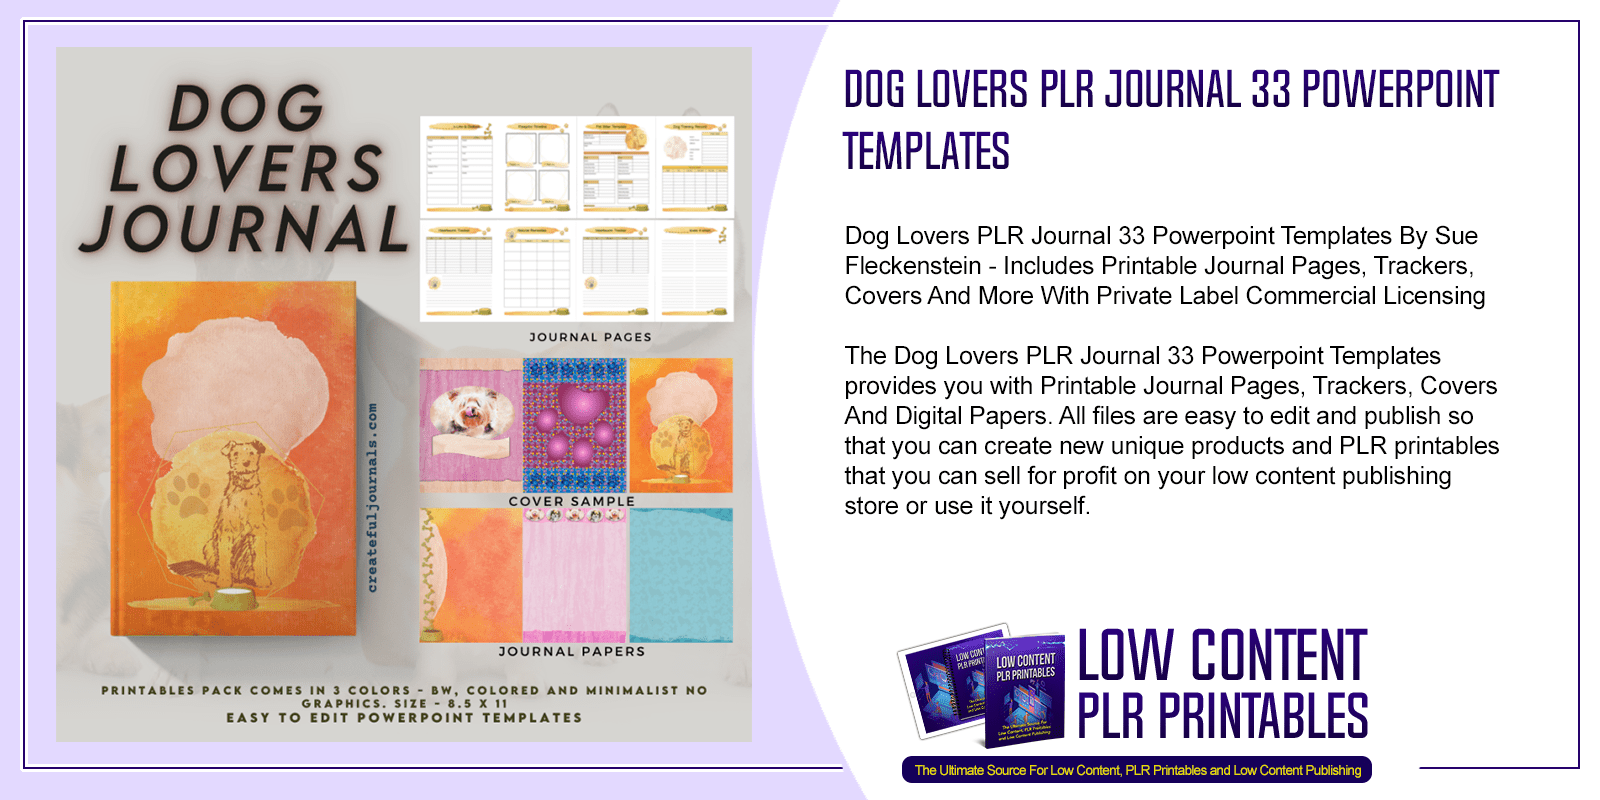 Dog Lovers PLR Journal 33 Powerpoint Templates